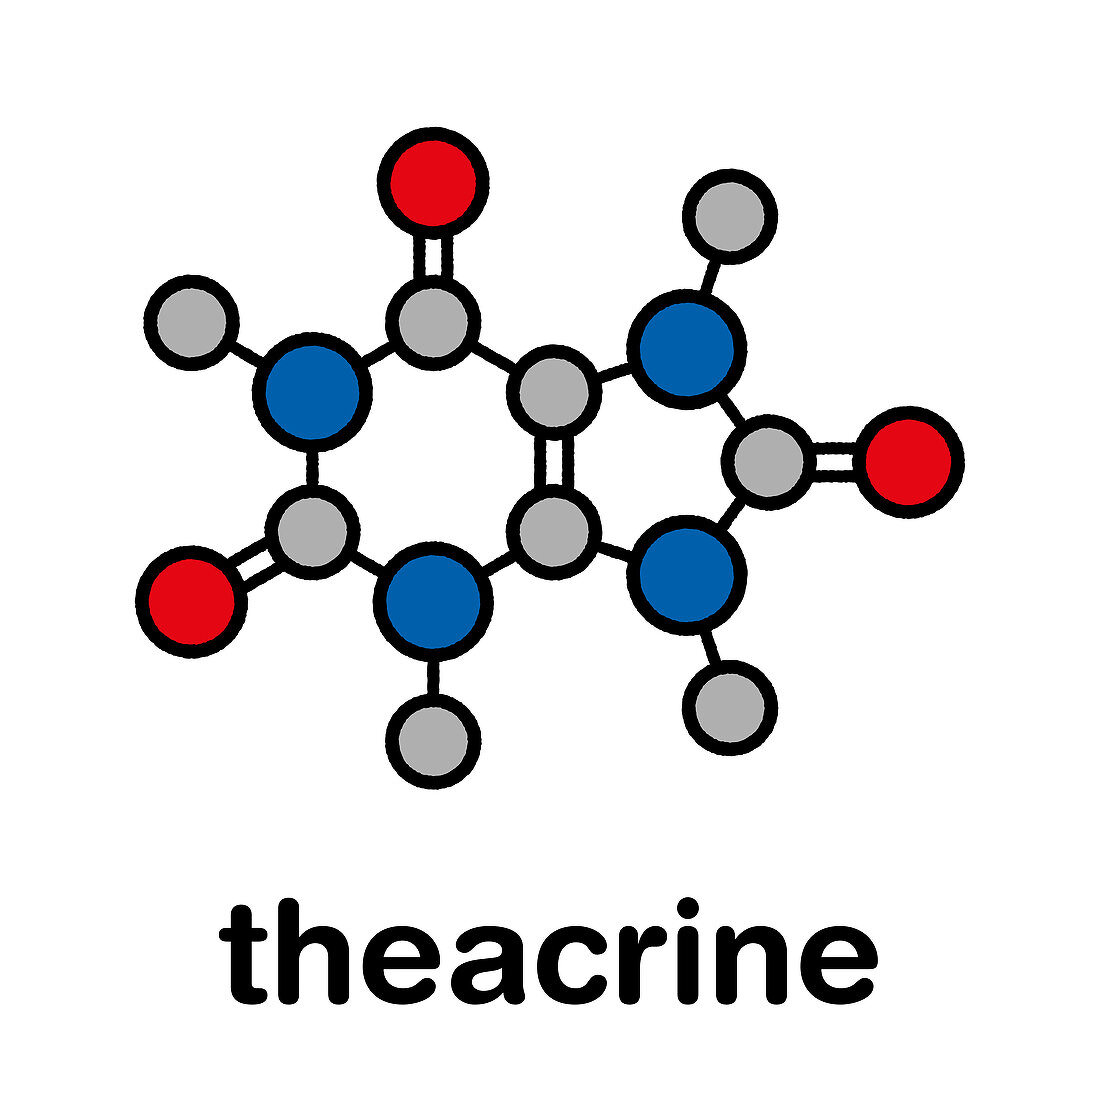 Theacrine molecule, illustration